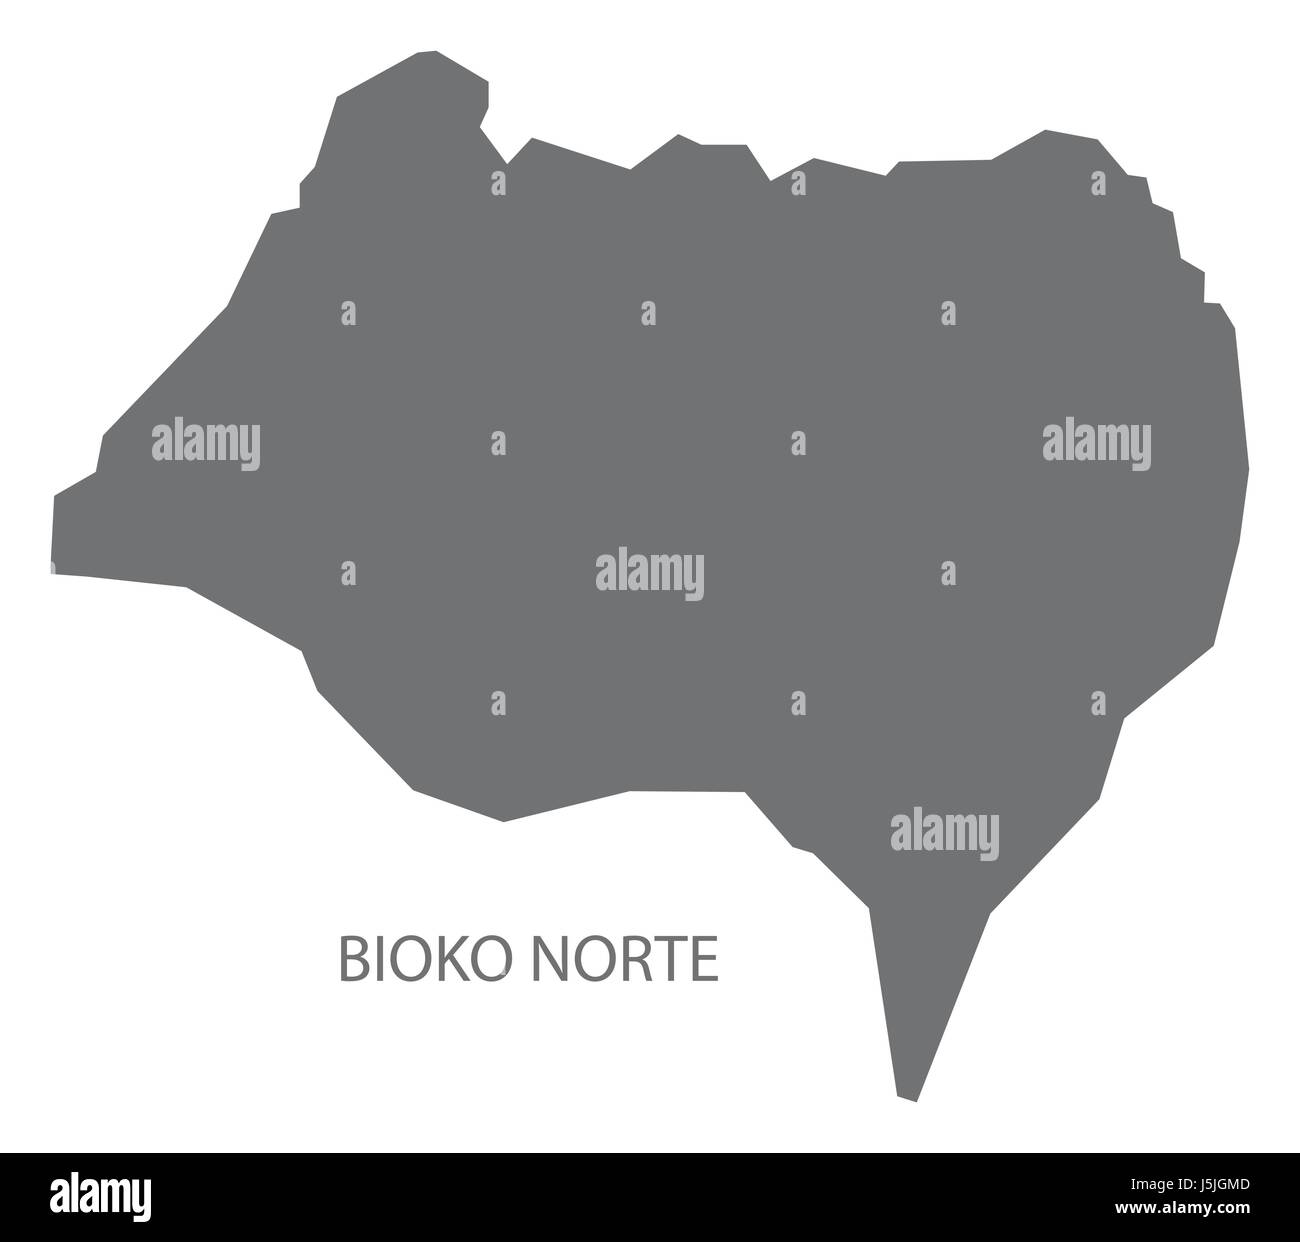 Bioko Norte Equatorial Guinea map grey illustration silhouette Stock Vector